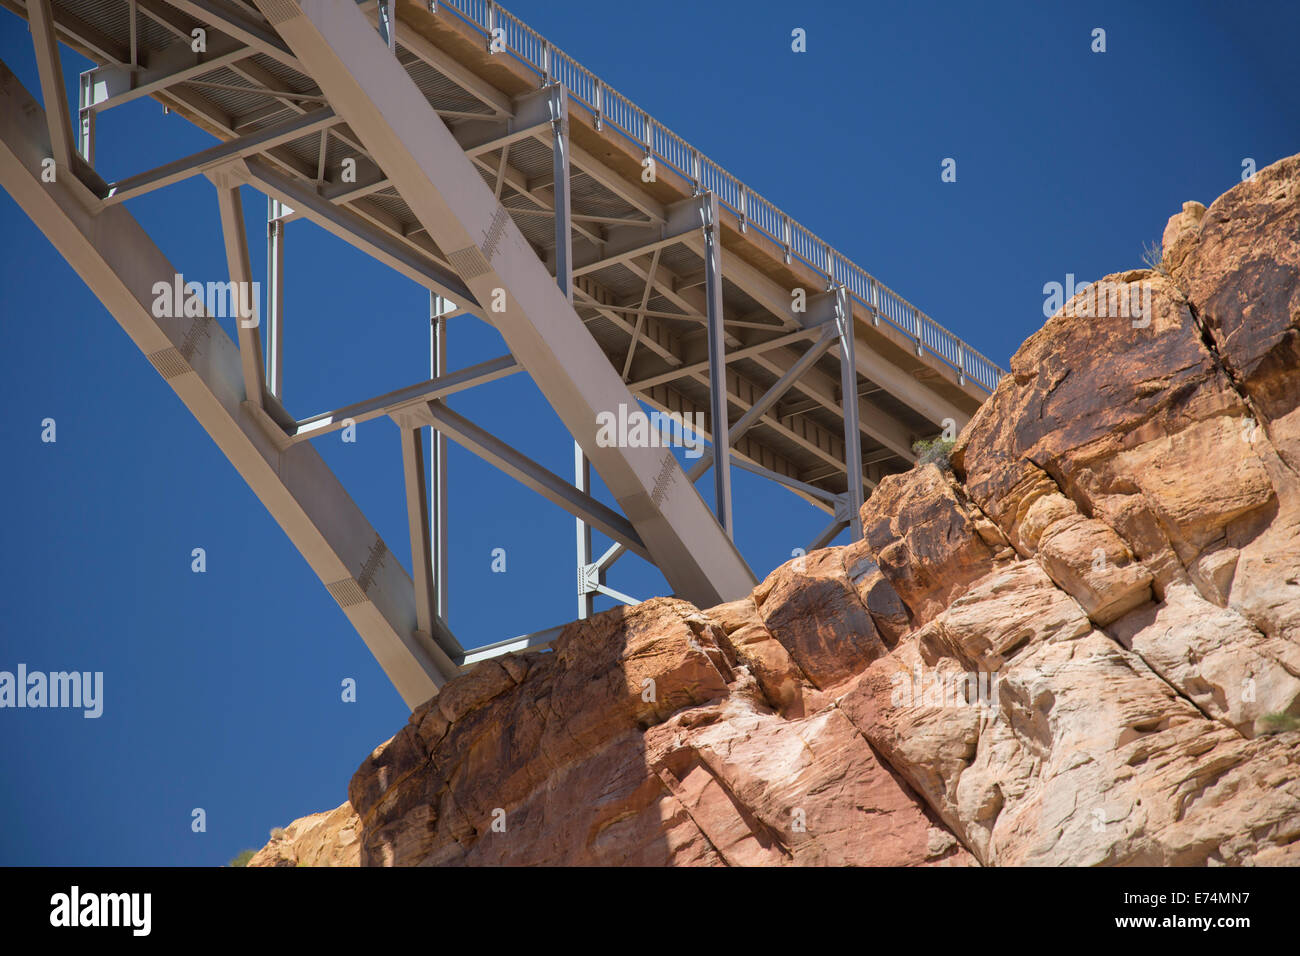 Glen Canyon National Recreation Area, Utah - die Brücke über den Colorado River/Lake Powell Hite, Utah. Stockfoto